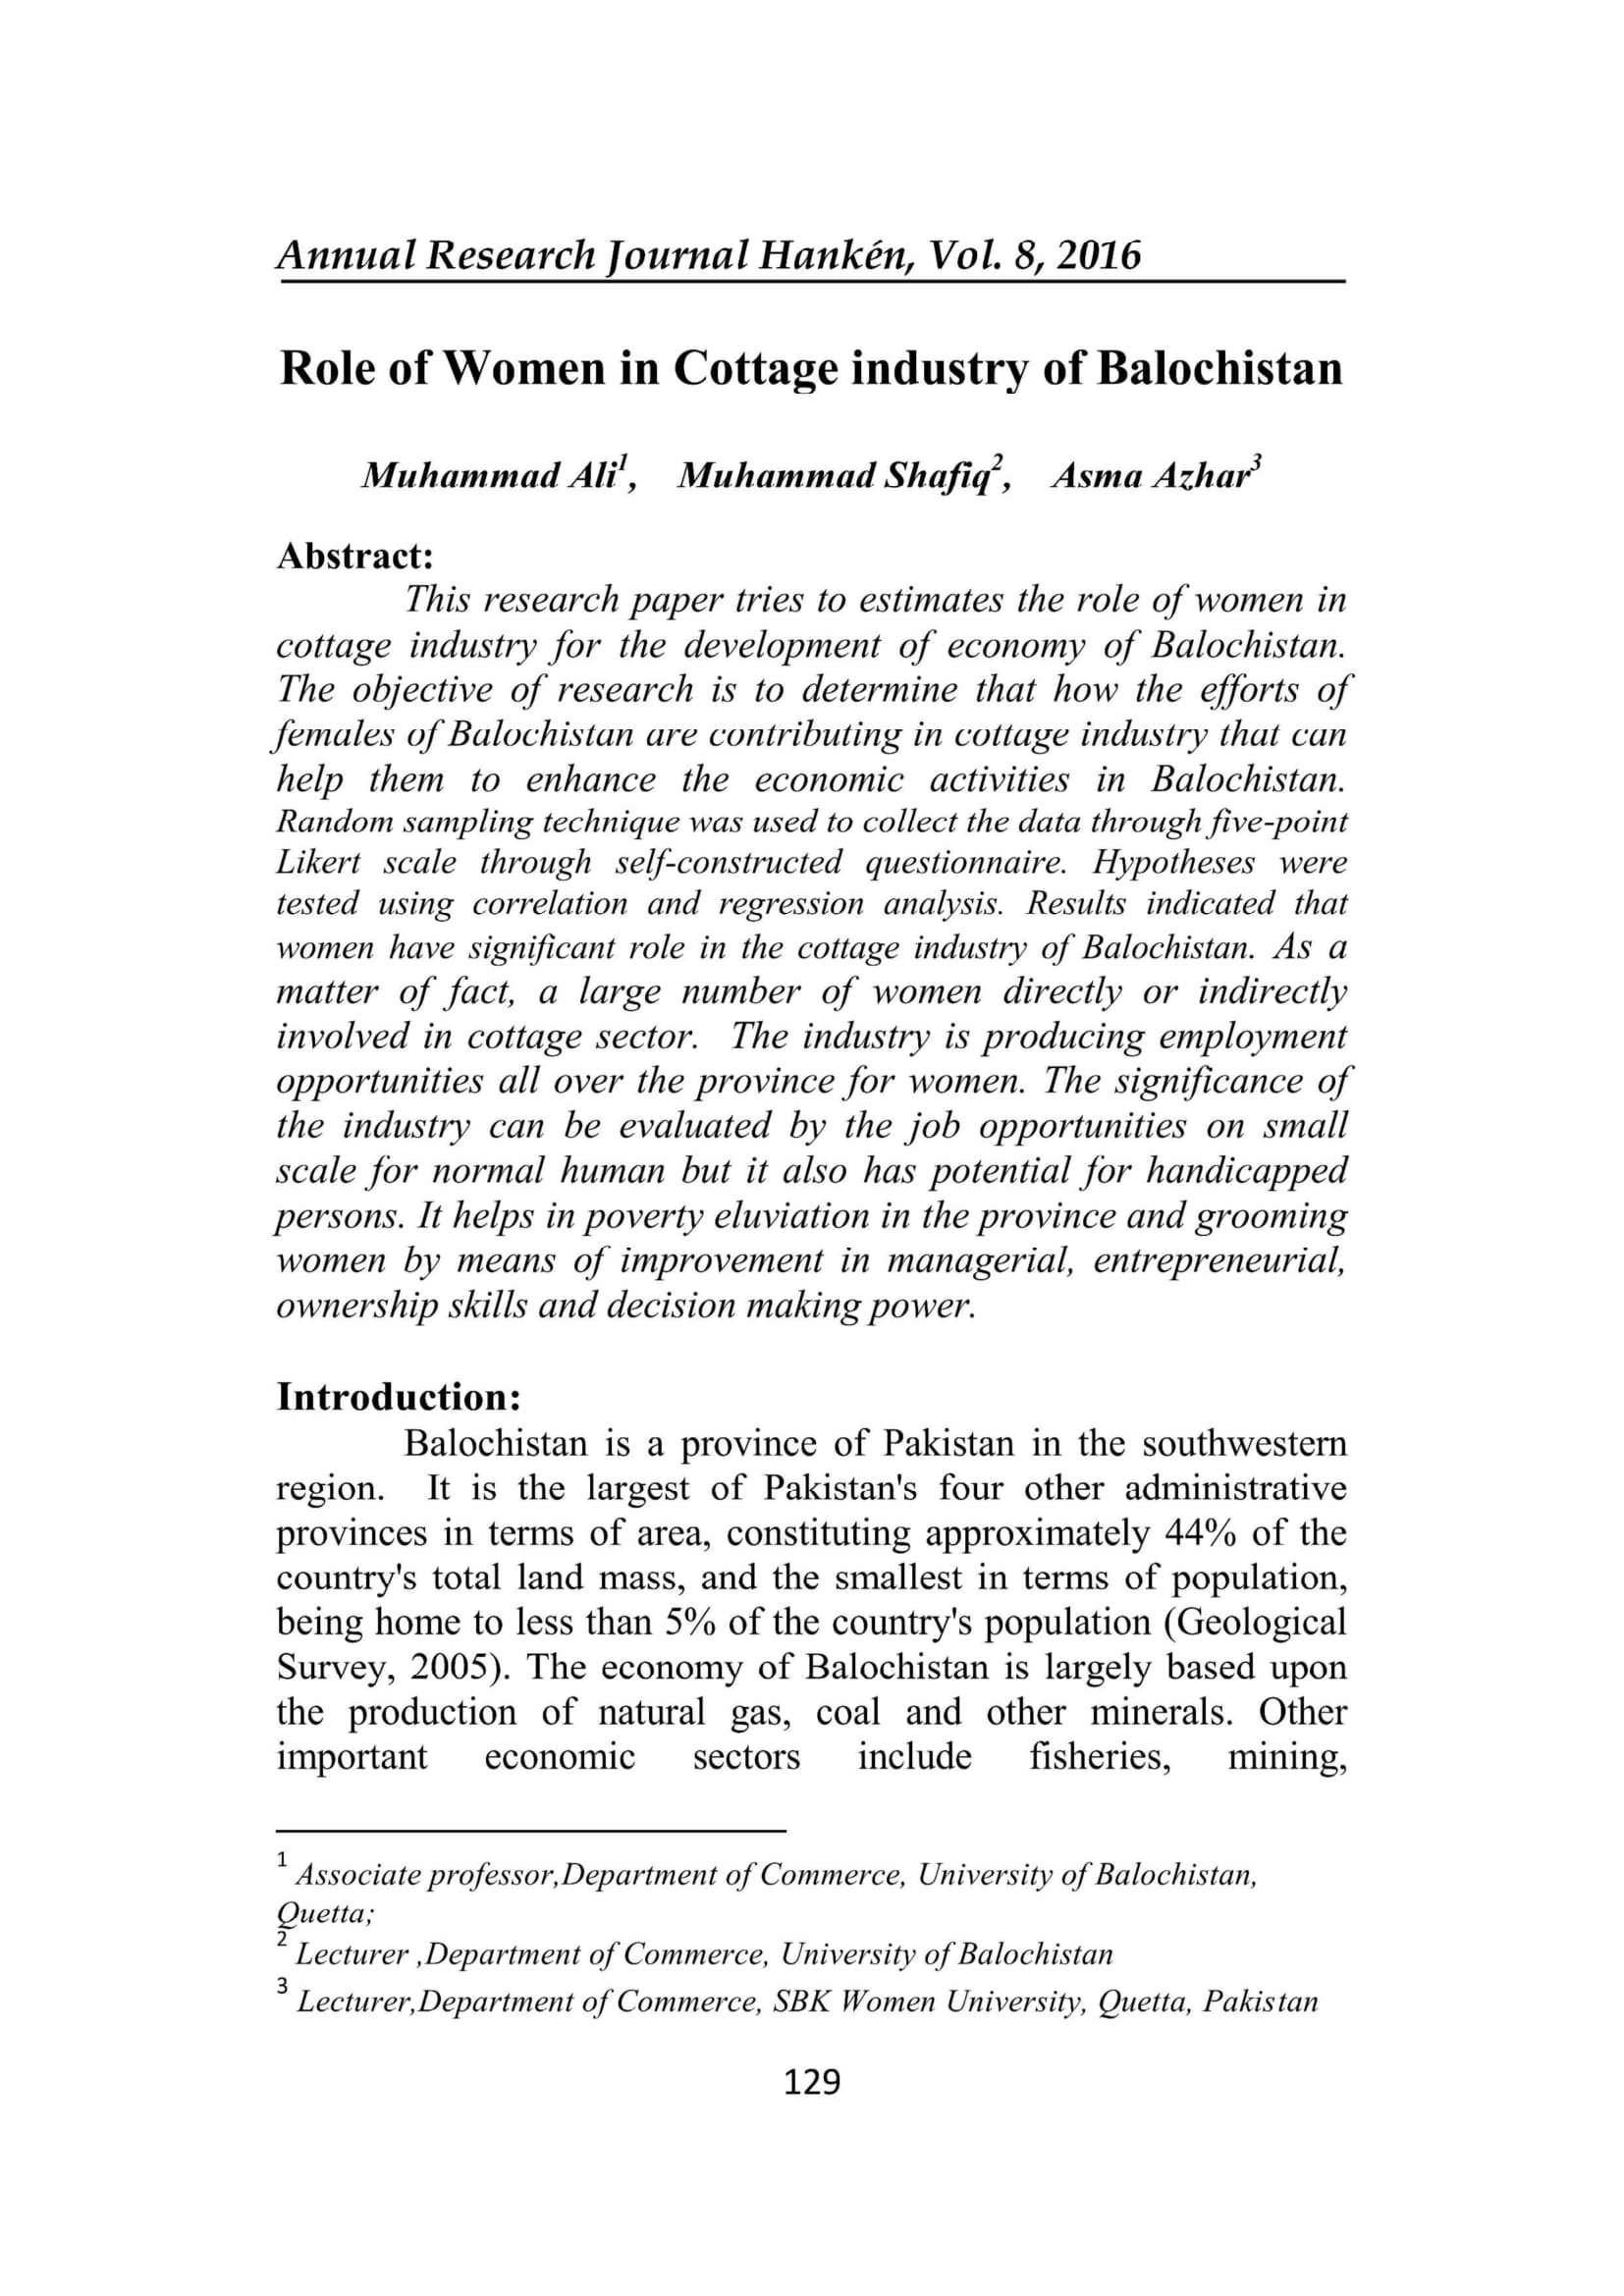 Role of Women in Cottage industry of Balochistan